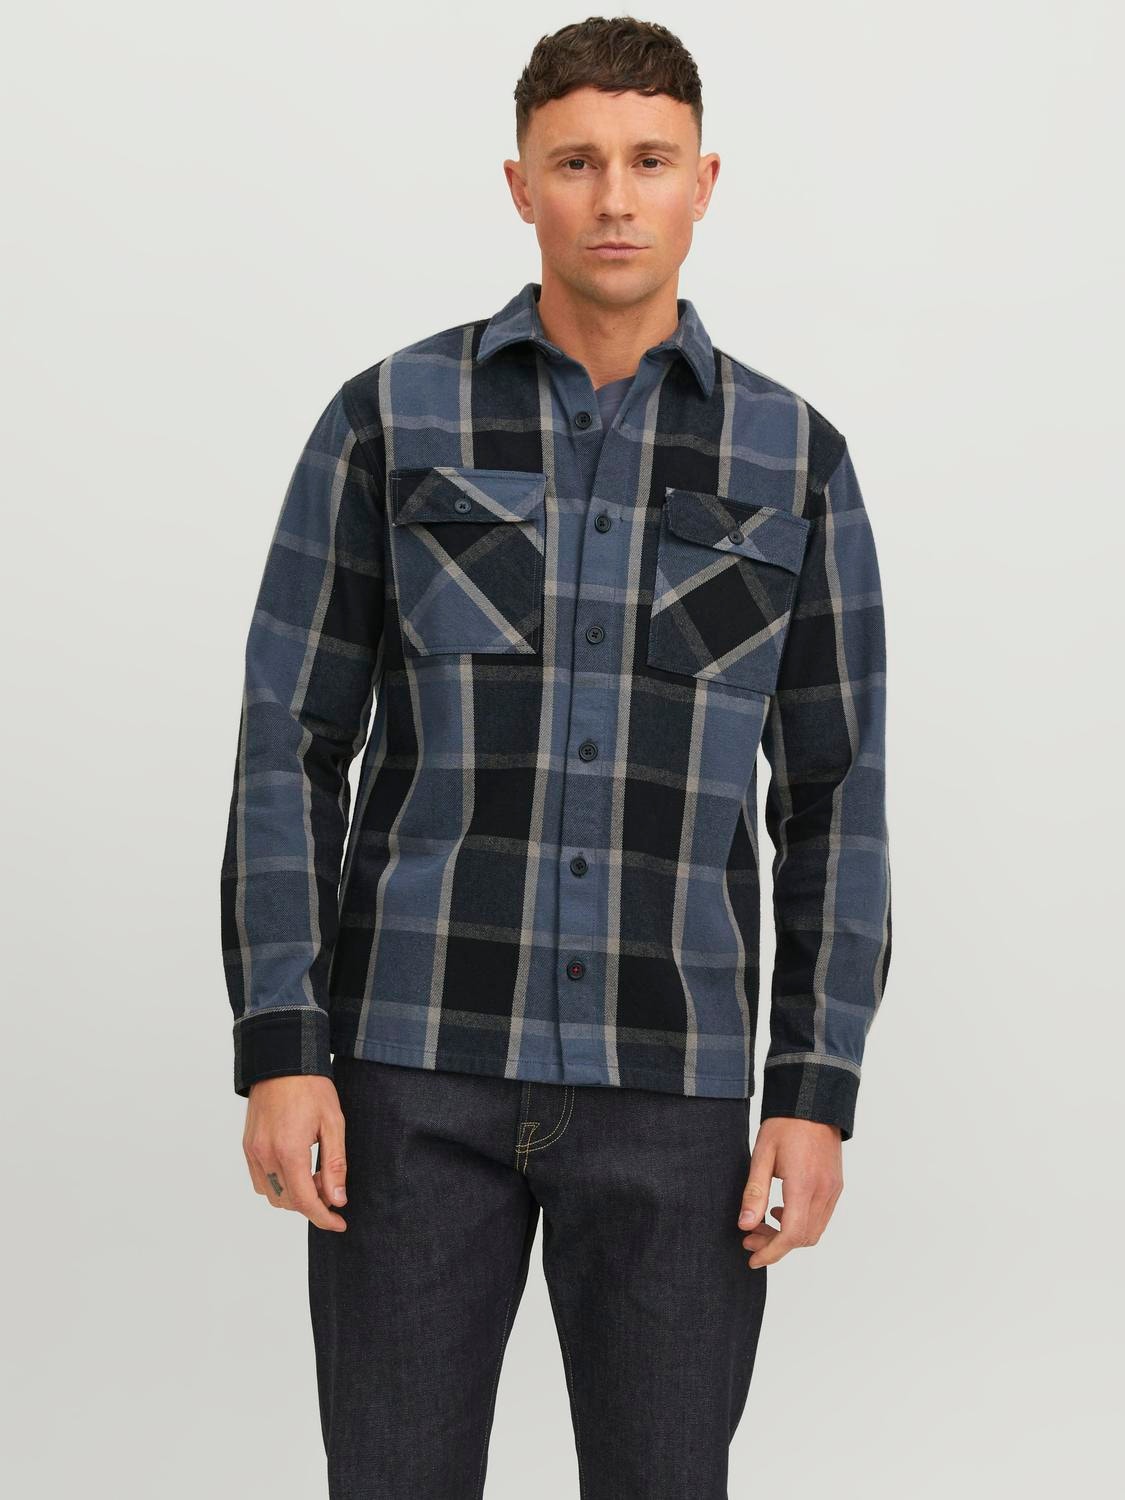 Jack & Jones RDD Wide Fit Overshirt -Charcoal Gray - 12243507